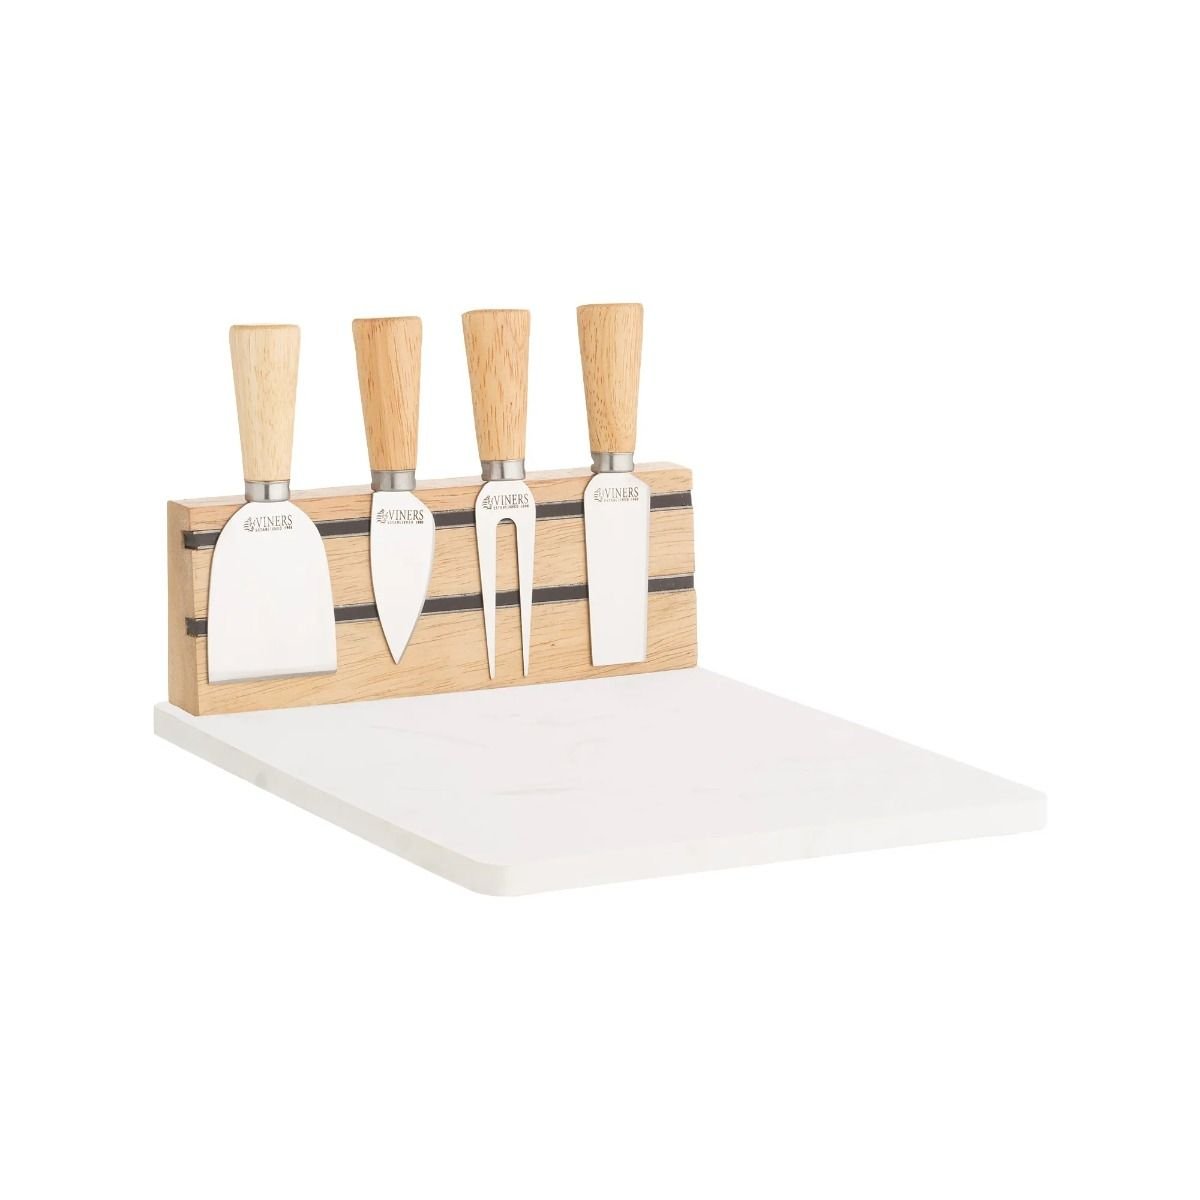 Bamboo Cutting Board with Cheese Slicer Blade, Swissmar